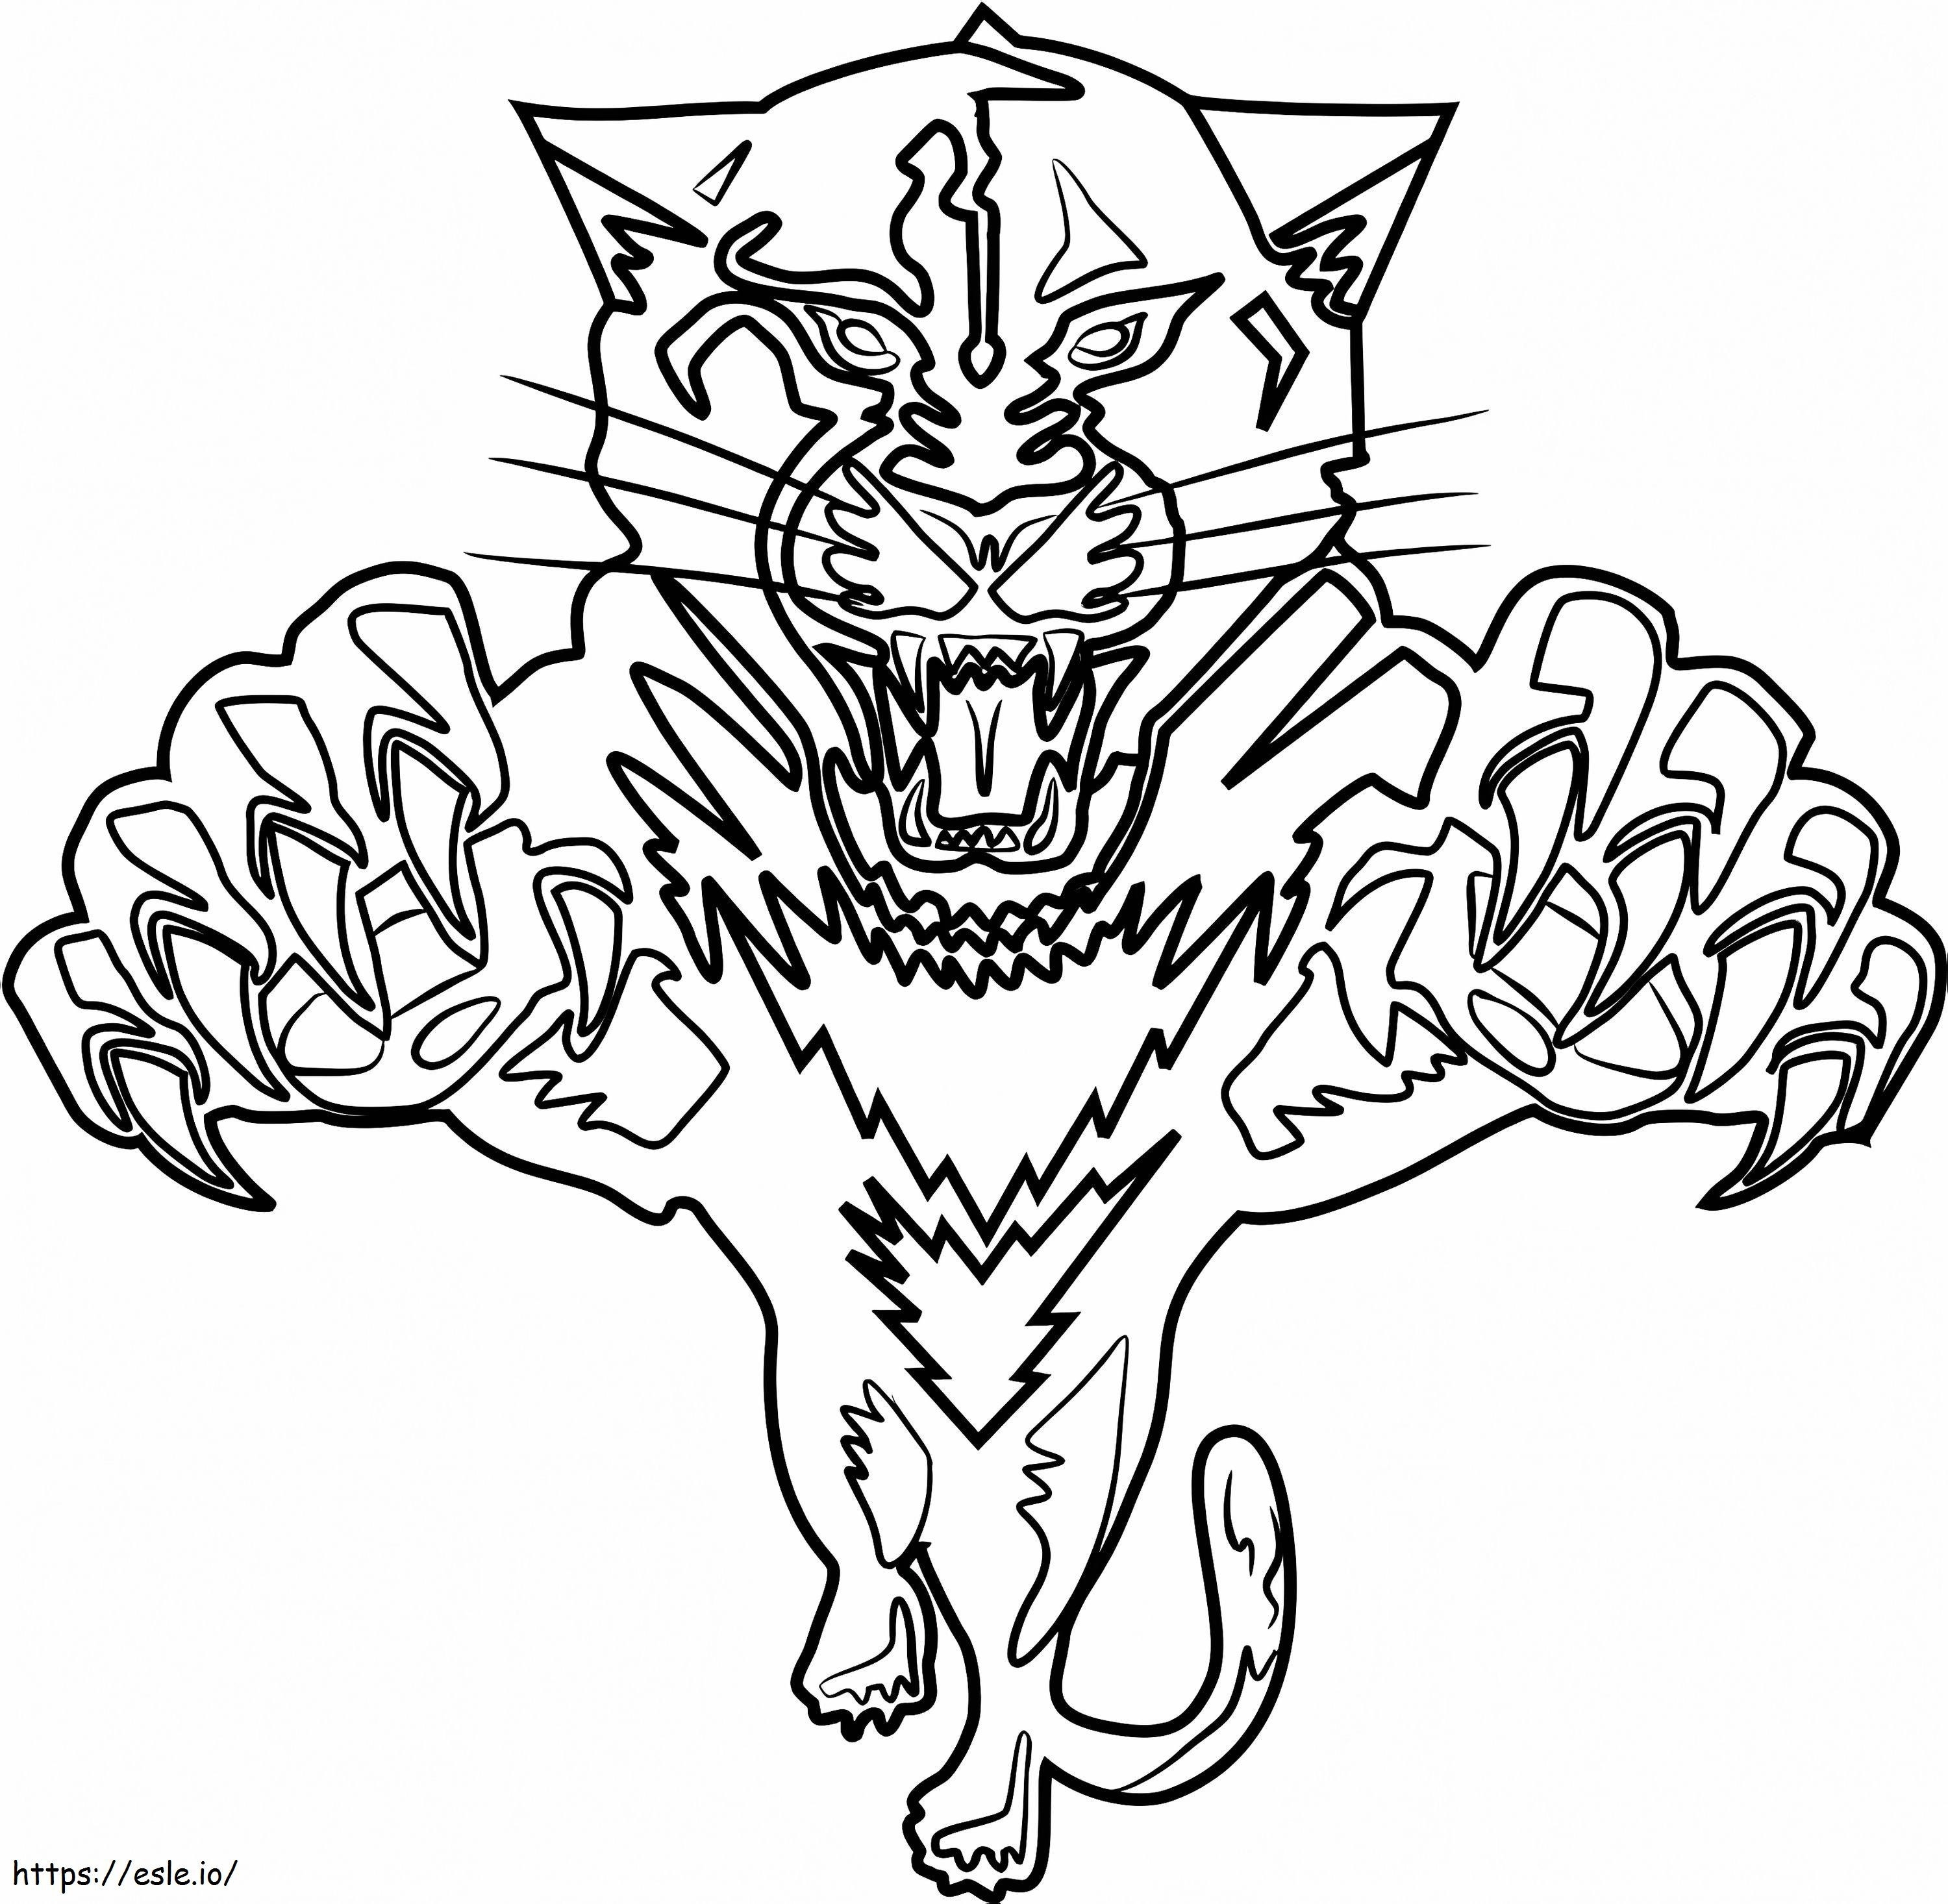 Logo der Florida Panthers ausmalbilder